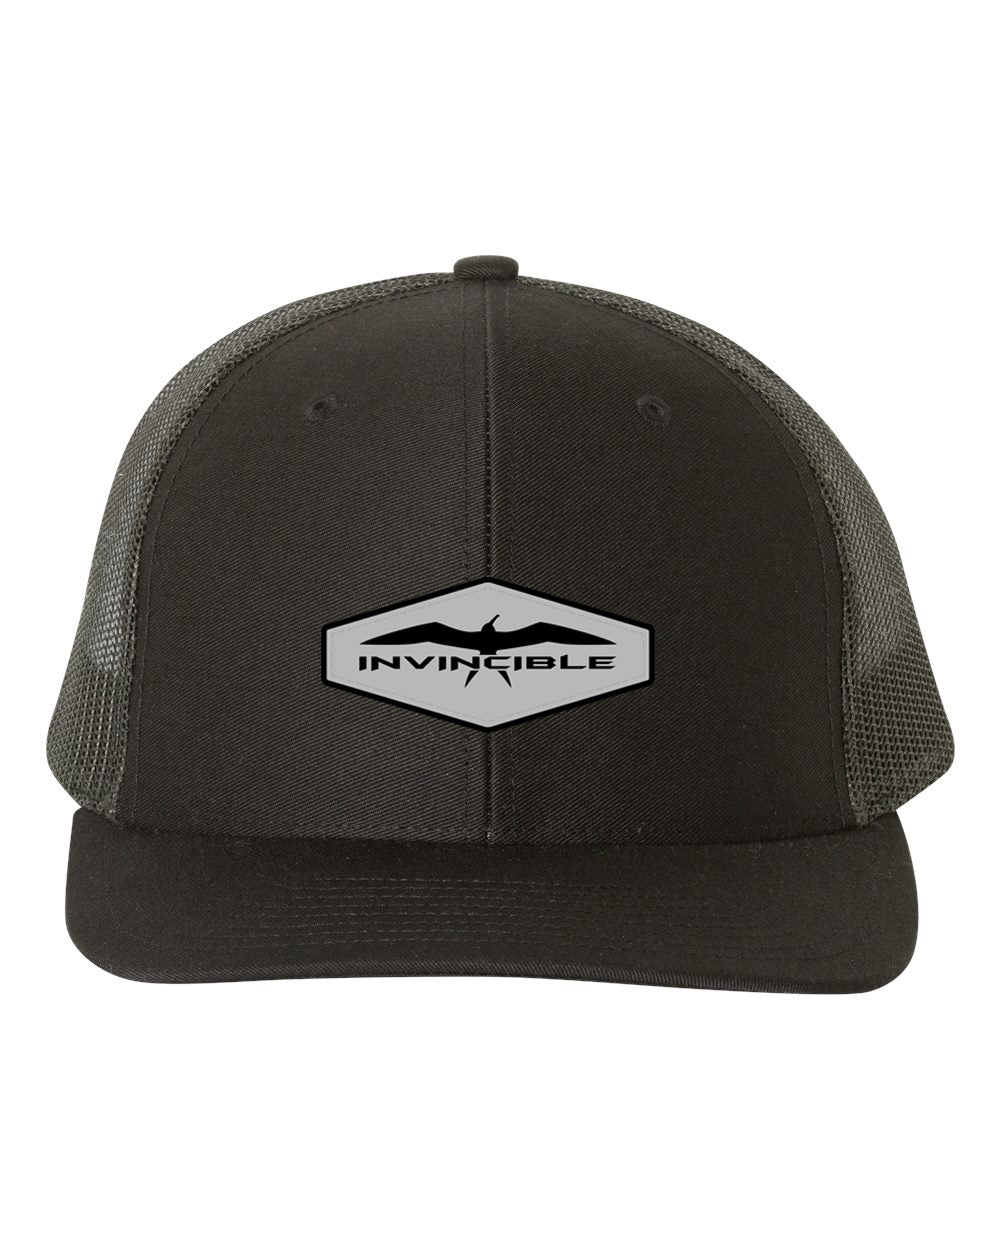 Invincible Signature Steel Black Leather Patch Black Trucker Hat